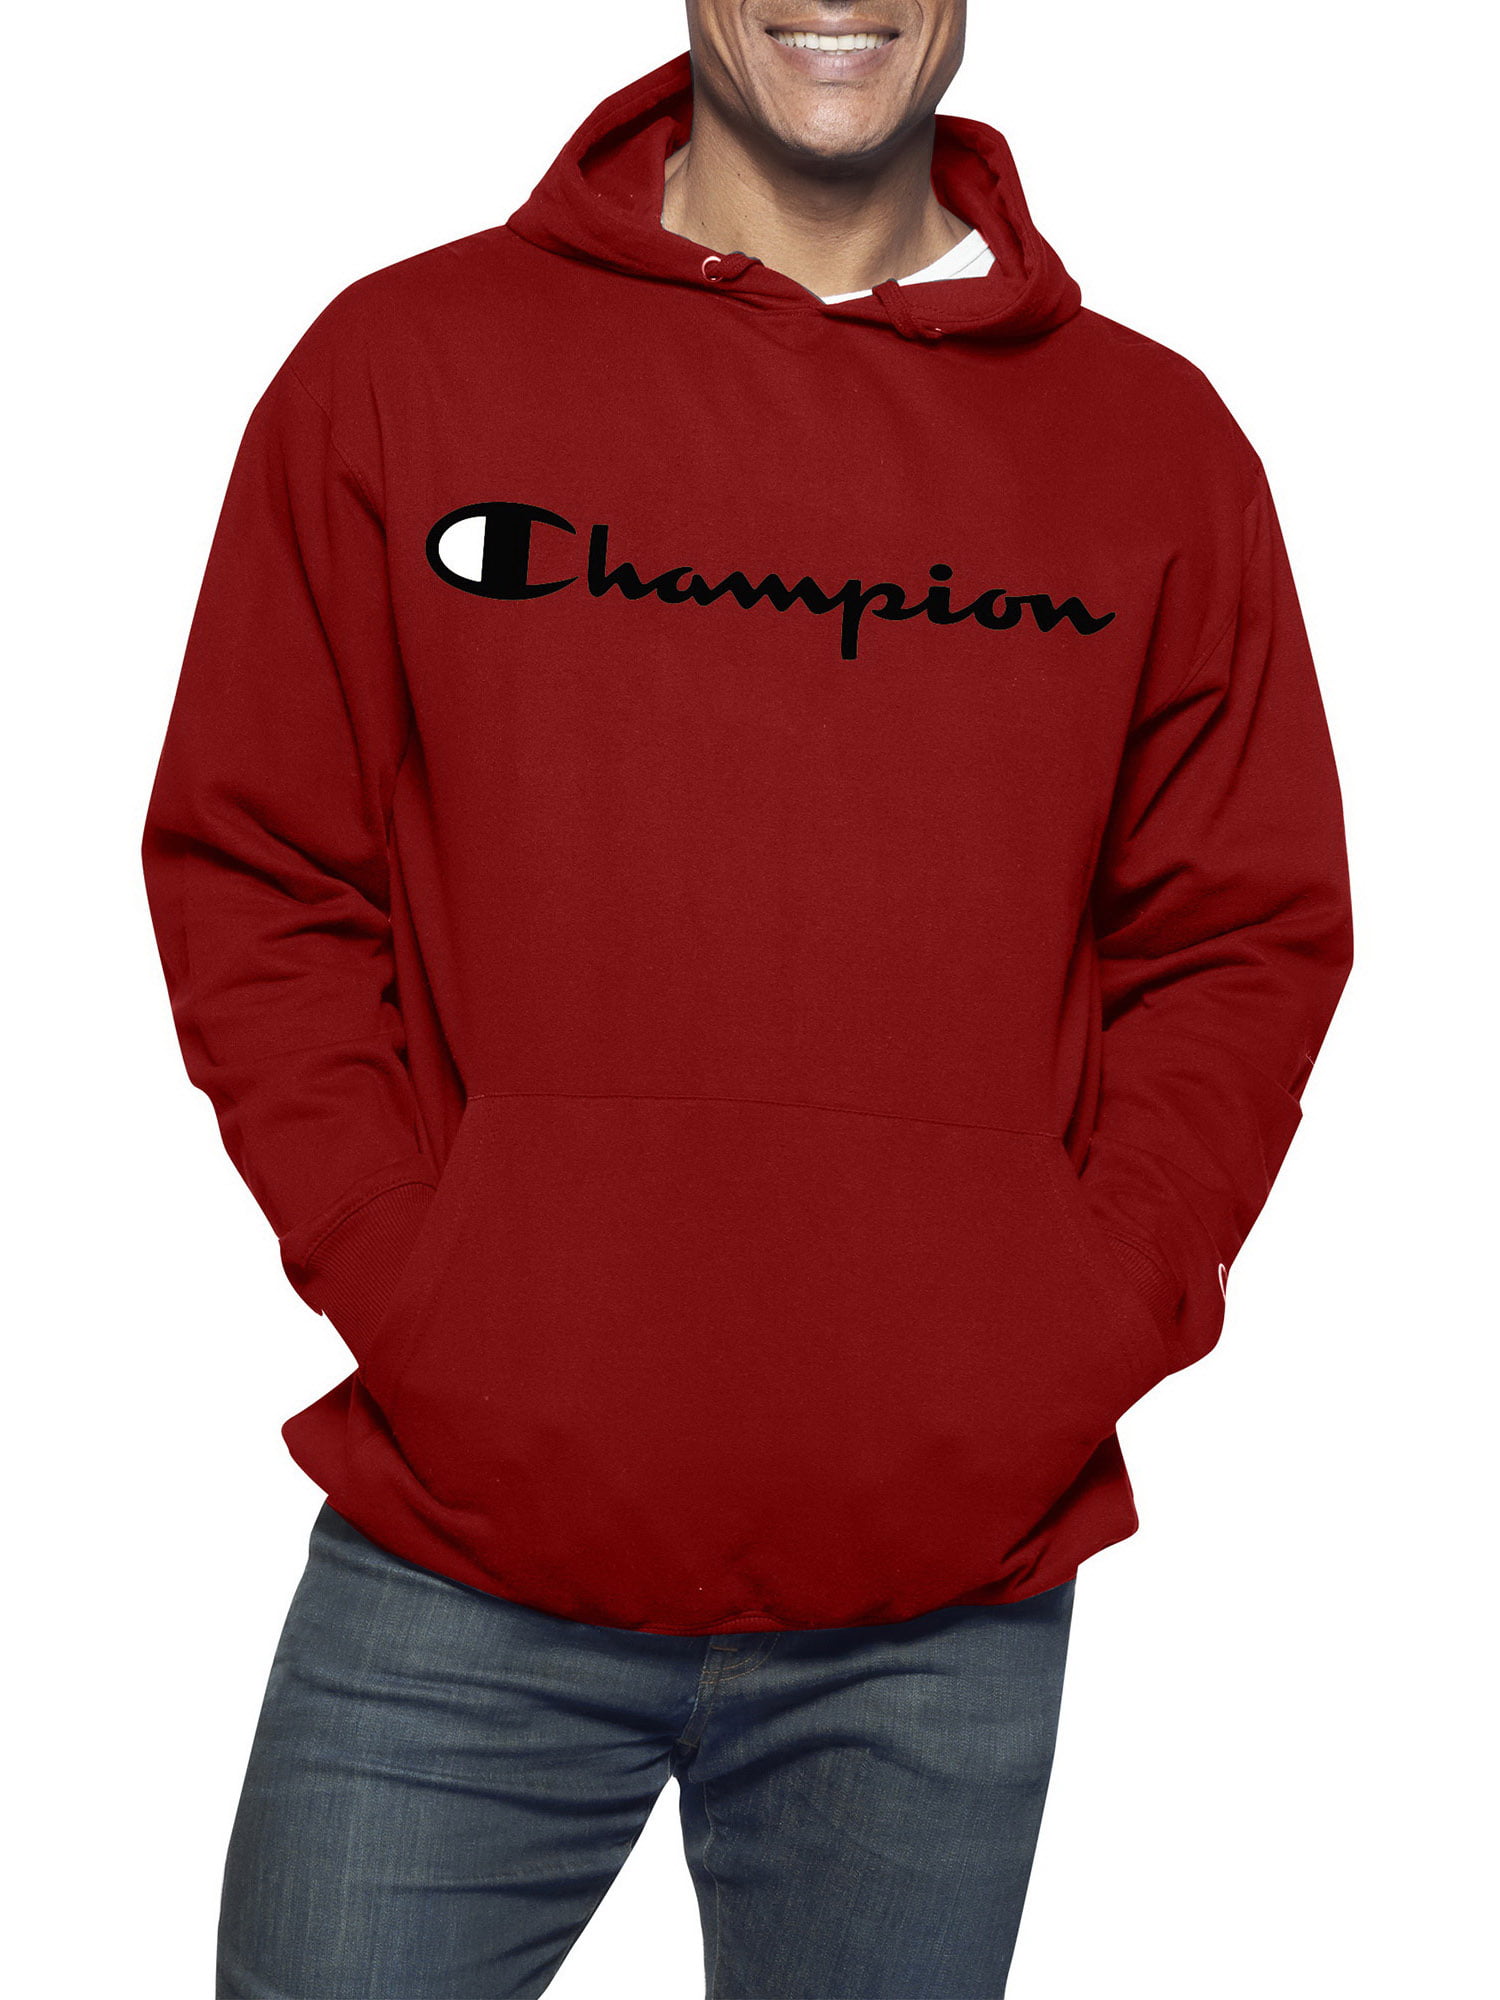 champion hoodie walmart